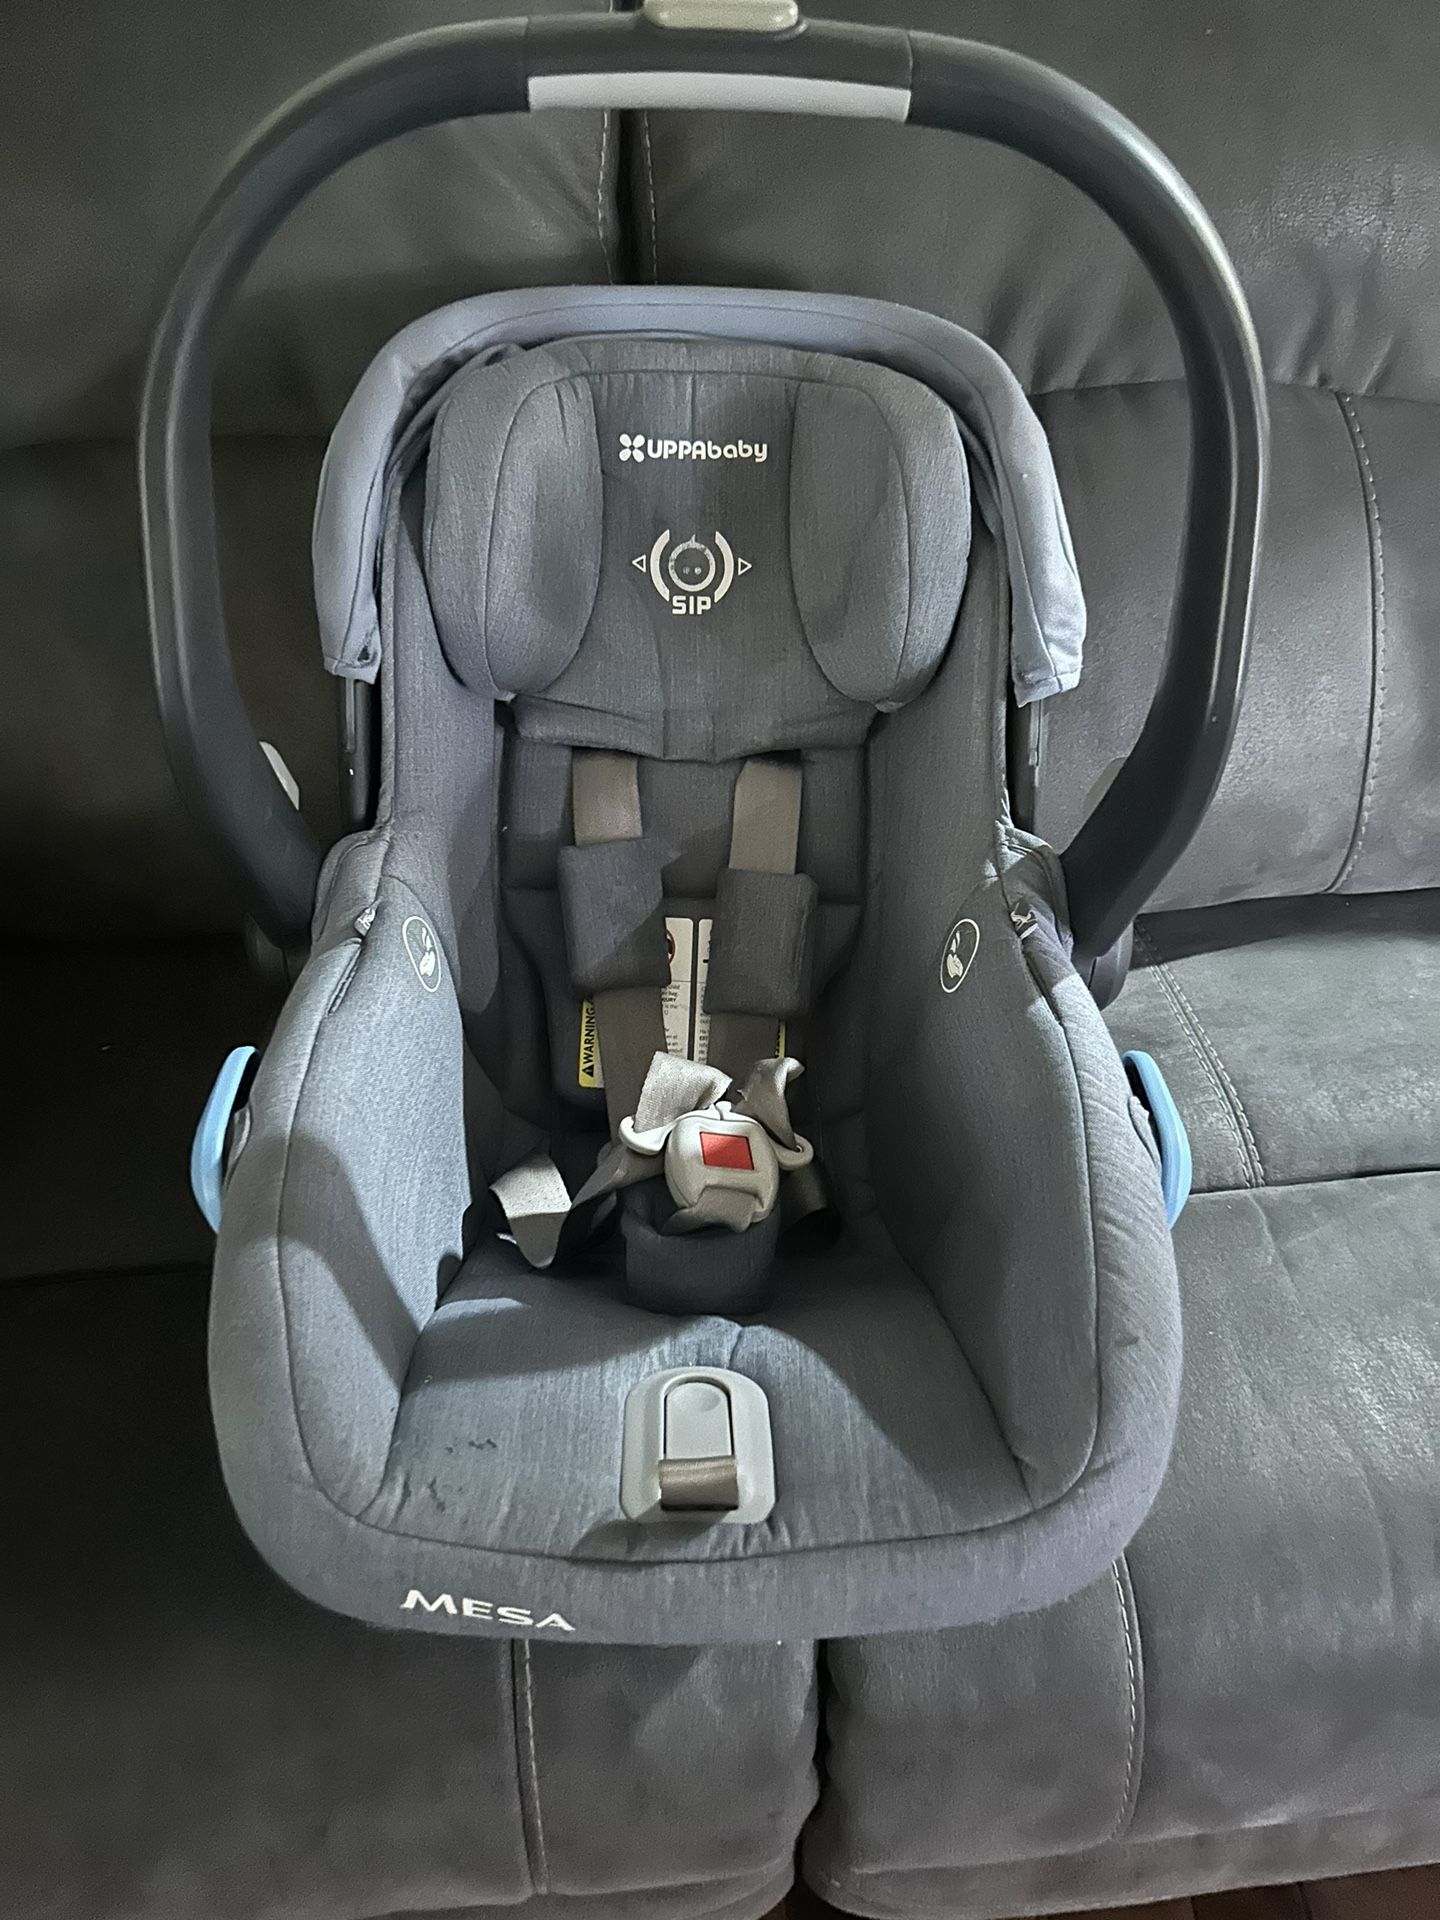 Uppa baby car seat 